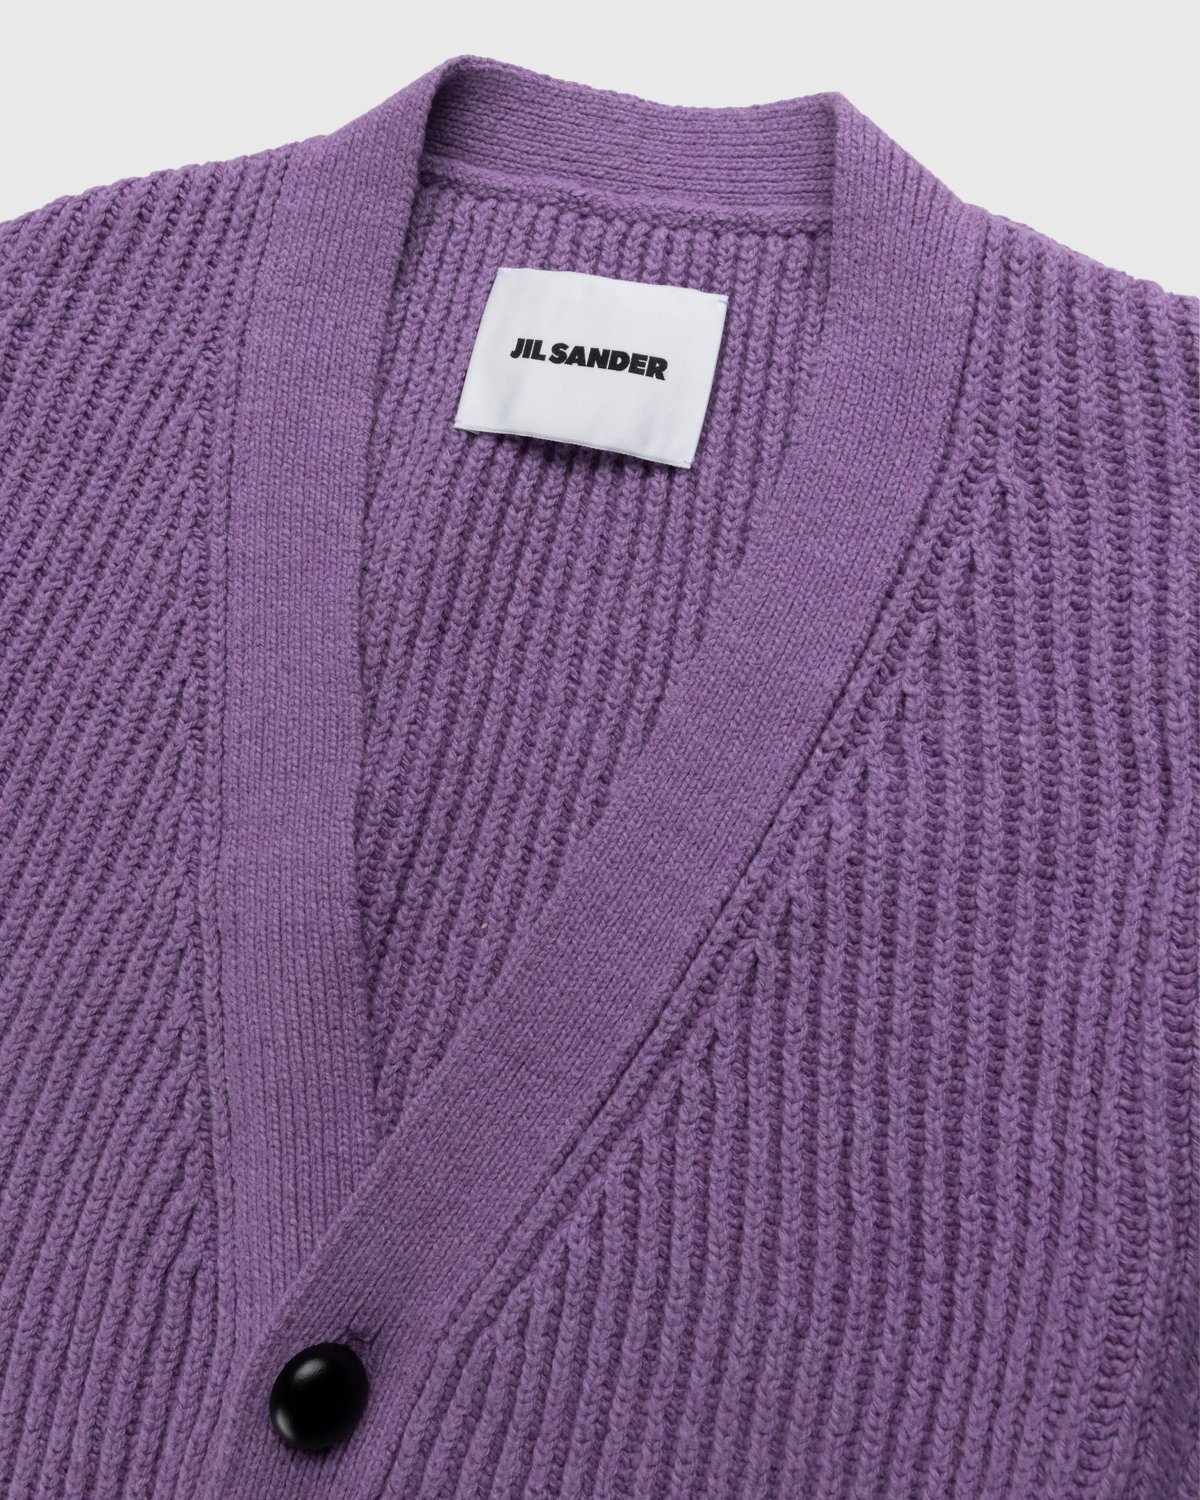 Jil Sander - Rib Knit Cardigan Medium Purple - Clothing - Purple - Image 3